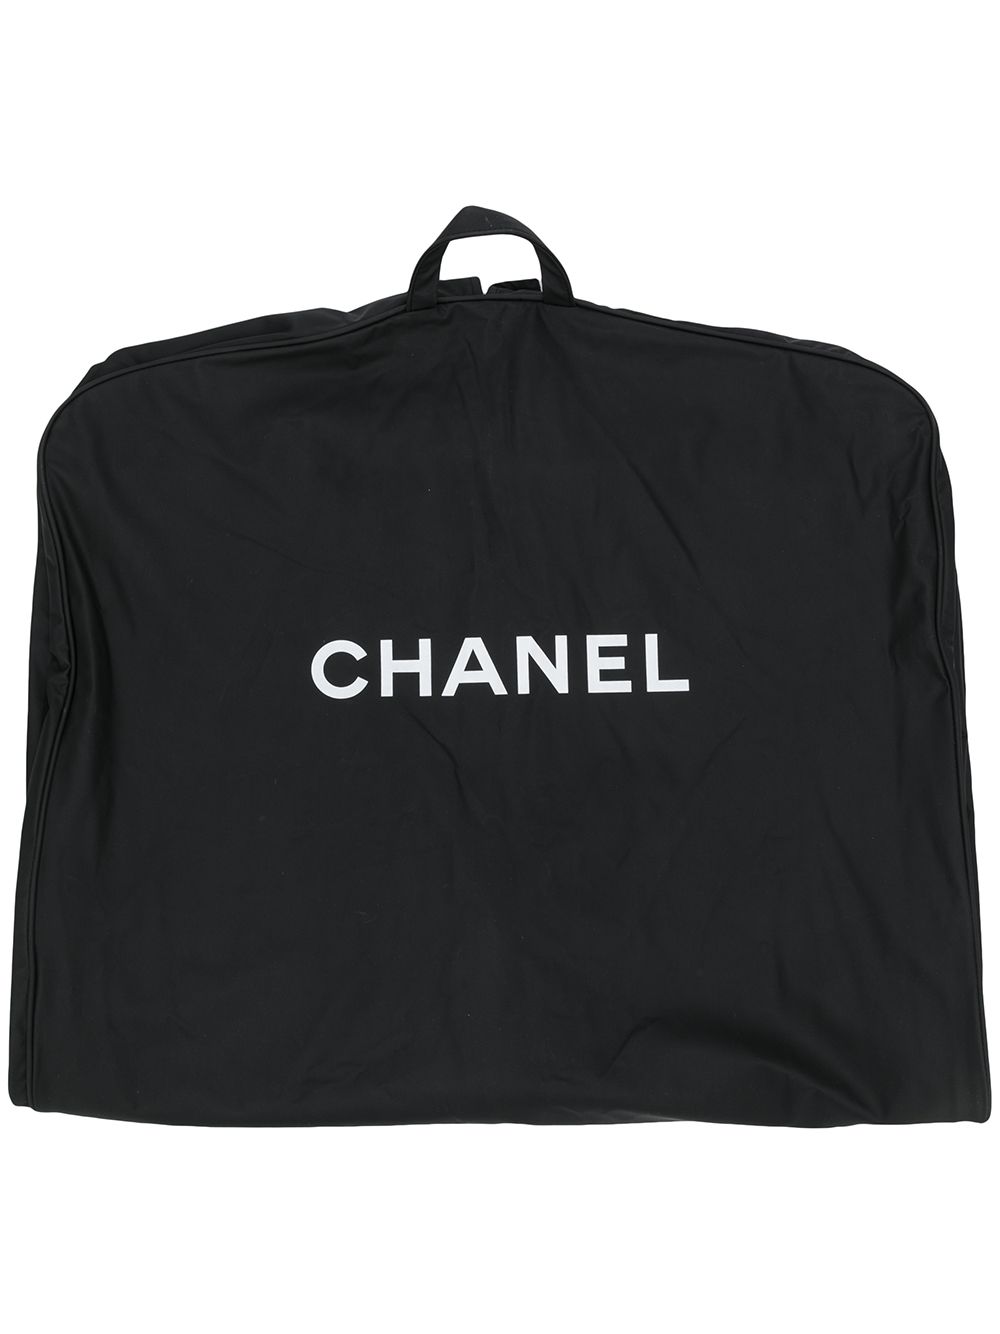 фото Chanel pre-owned чехол для одежды 1990-х годов с логотипом